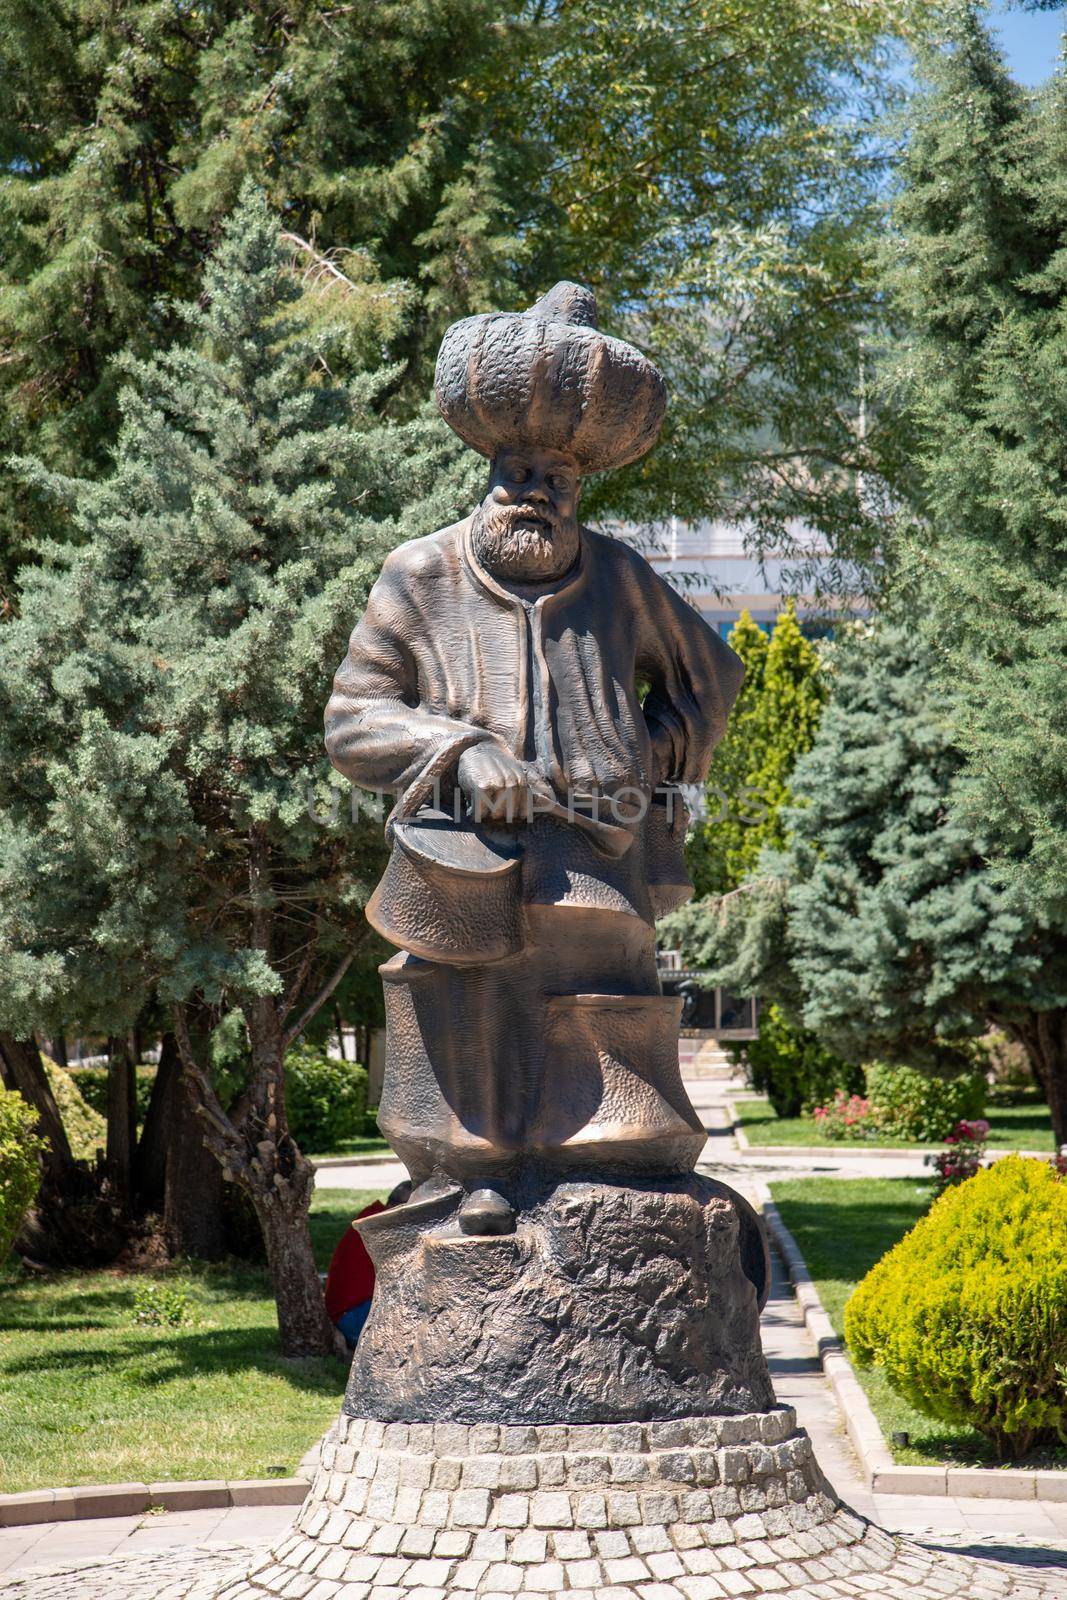 Aksehir, Turkey - July 04, 2022: The modern monument of the national hero Hoca Nasreddin and Aksehir city square by Sonat